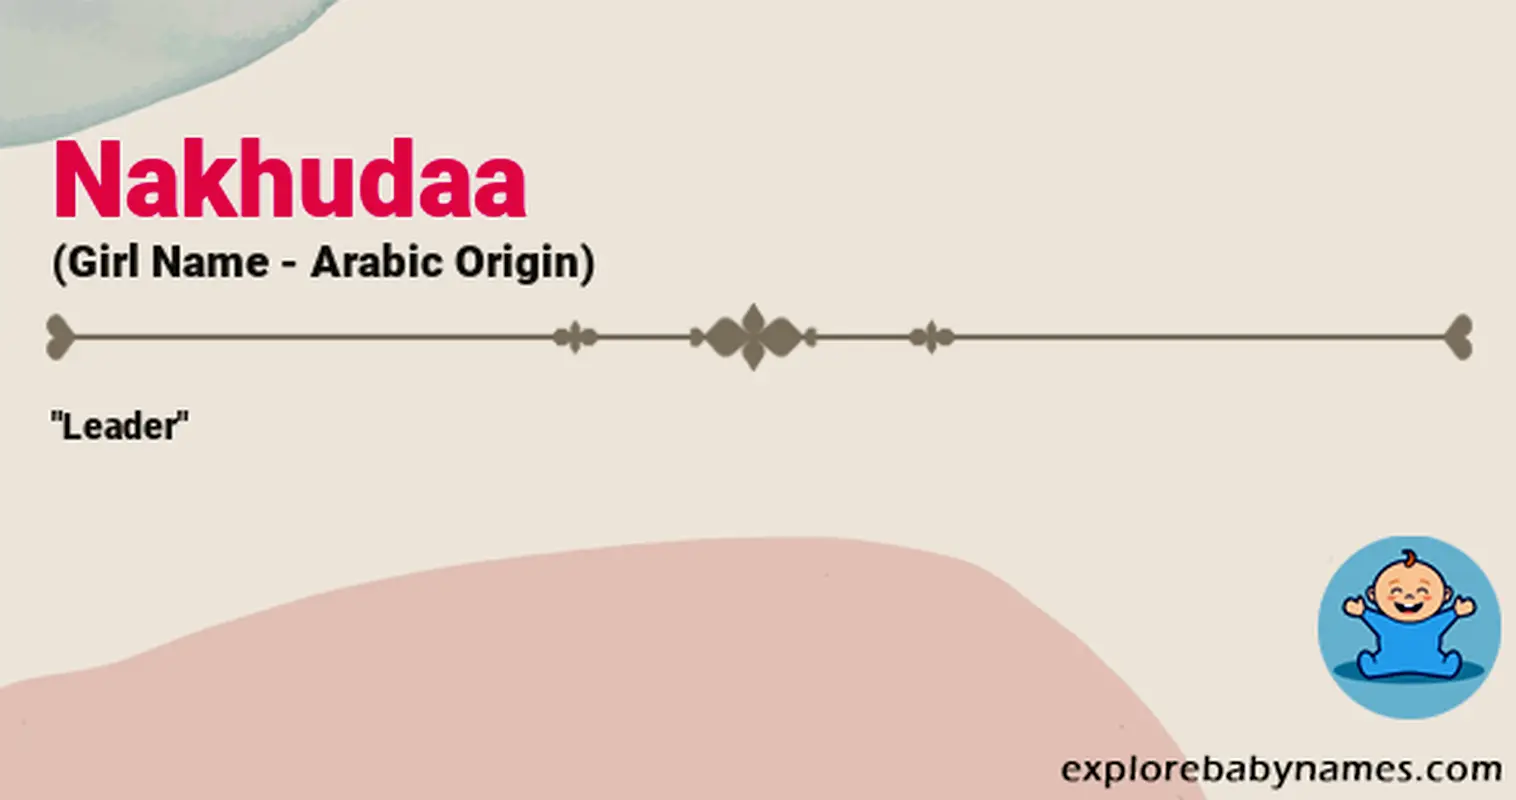 Meaning of Nakhudaa